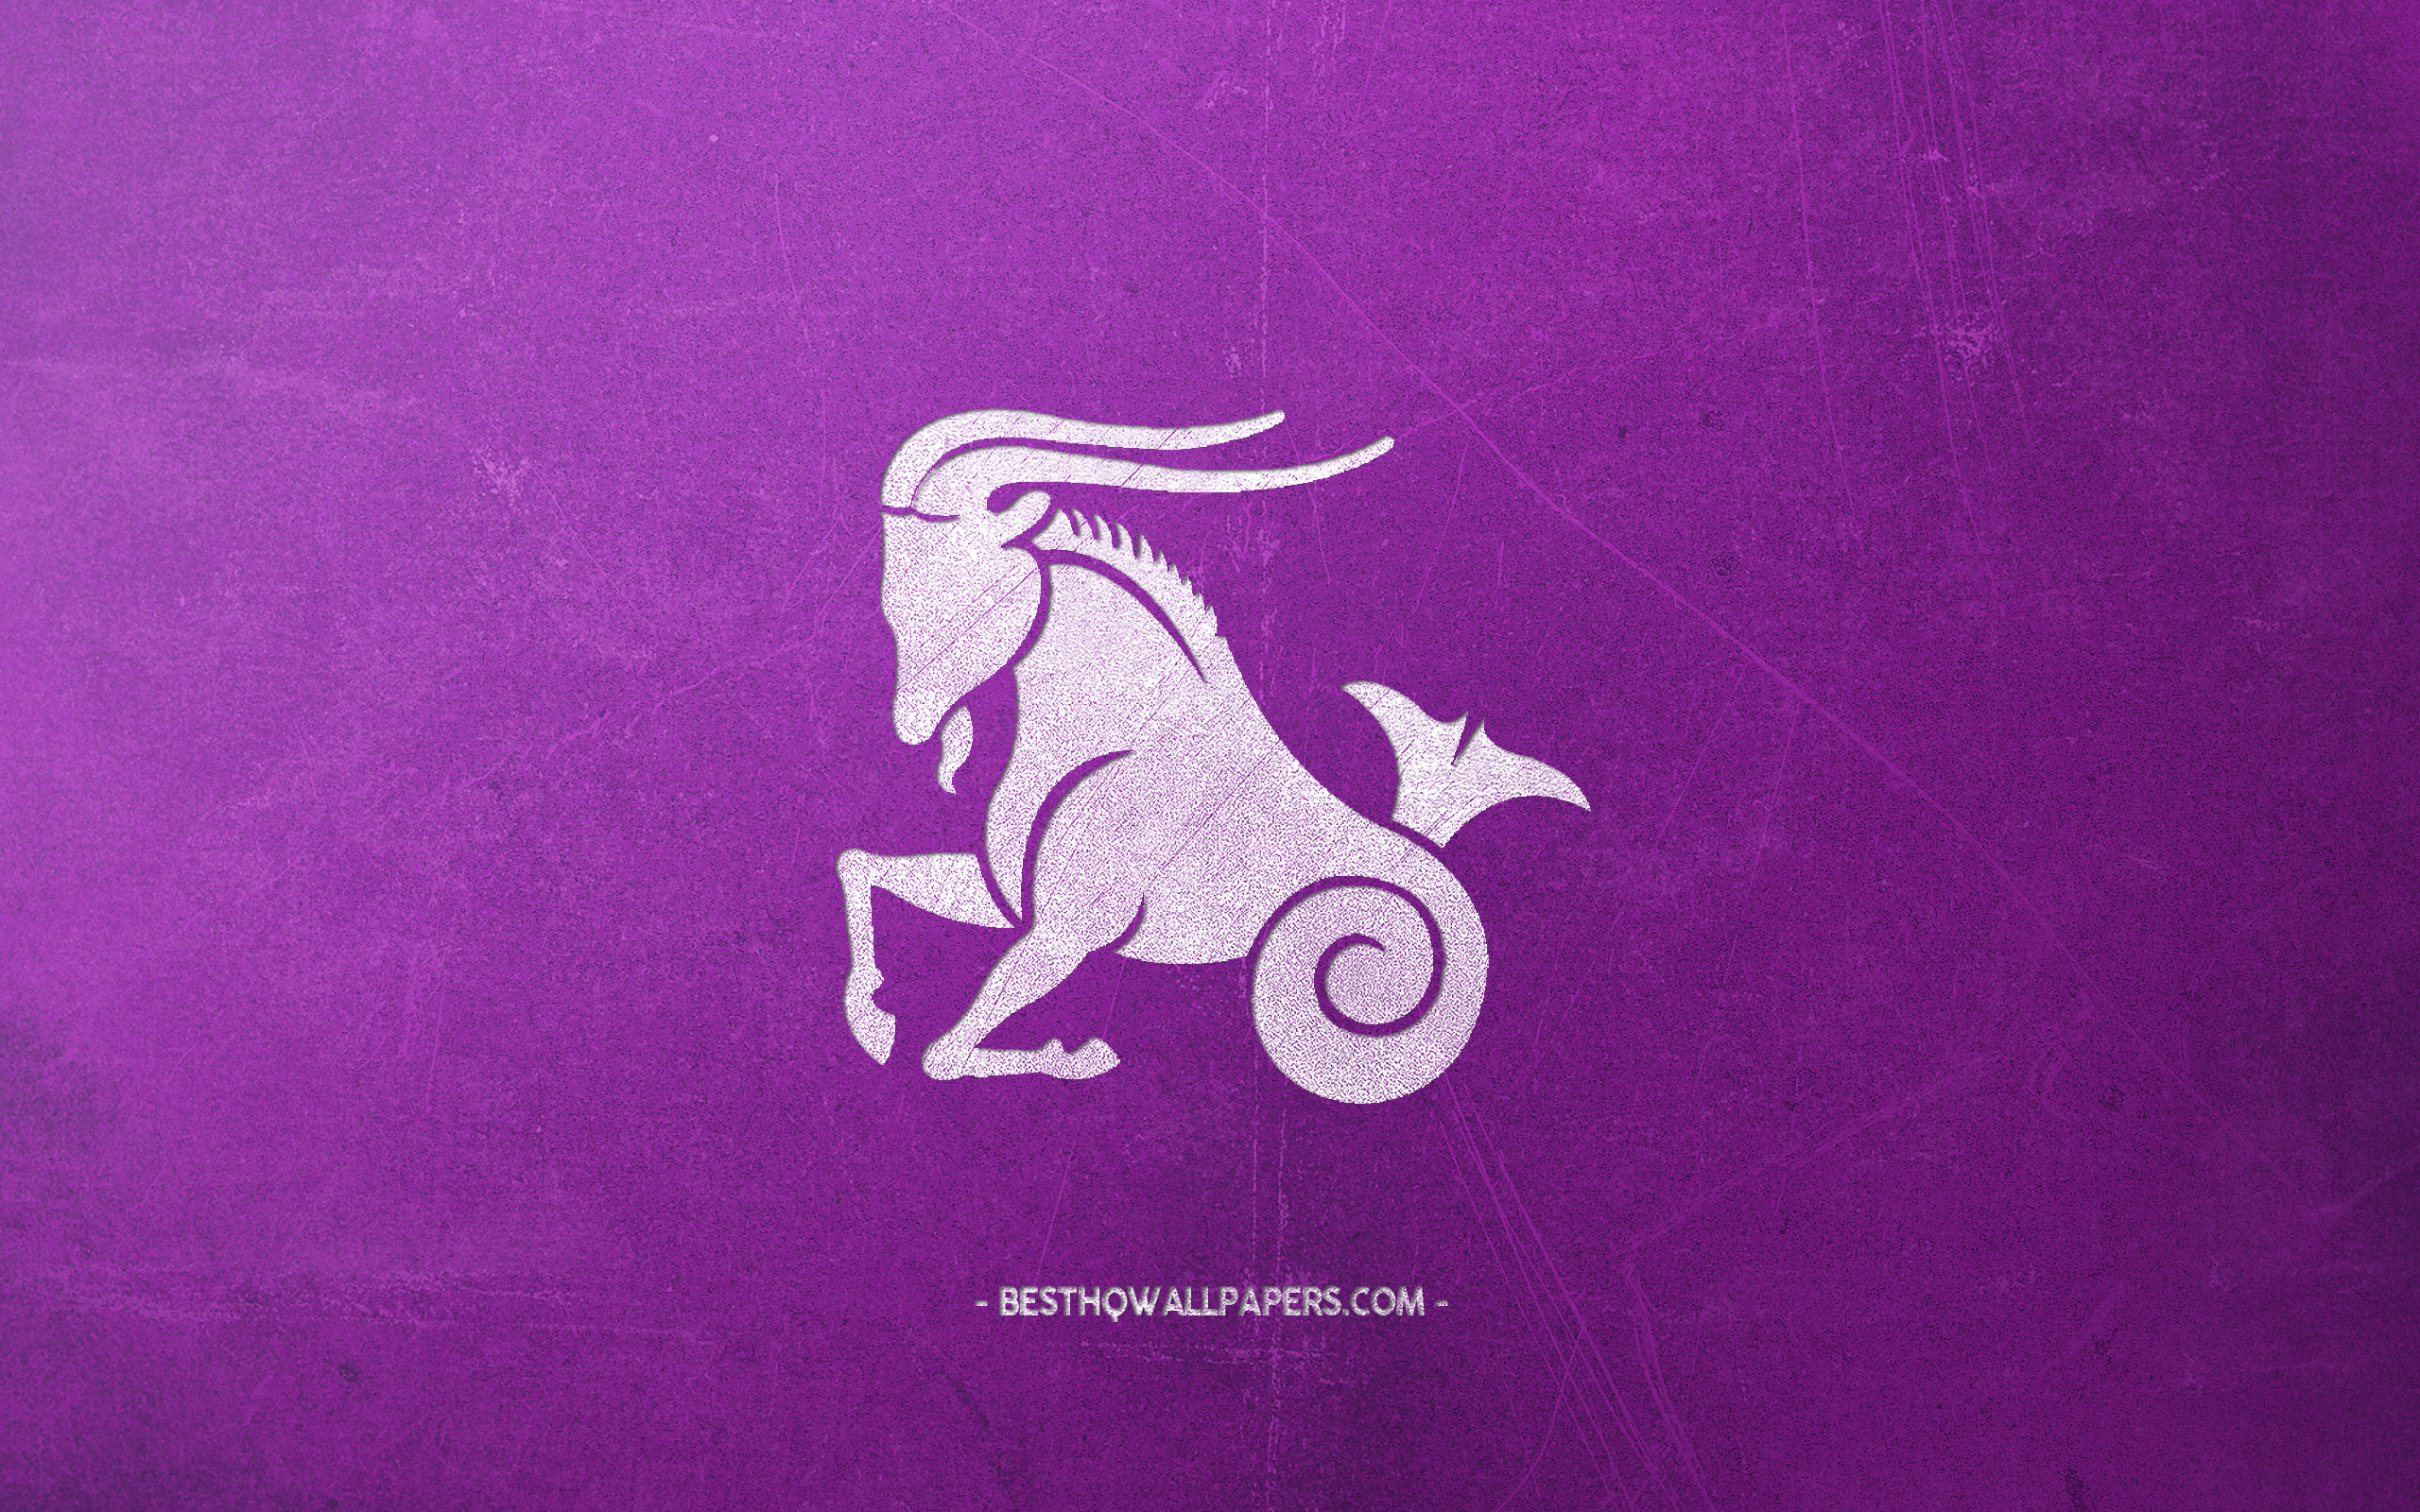 Download wallpaper Capricorn zodiac sign, purple retro background, Capricorn Horoscope sign, retro style, creative art, zodiac signs, Capricorn for desktop with resolution 2560x1600. High Quality HD picture wallpaper